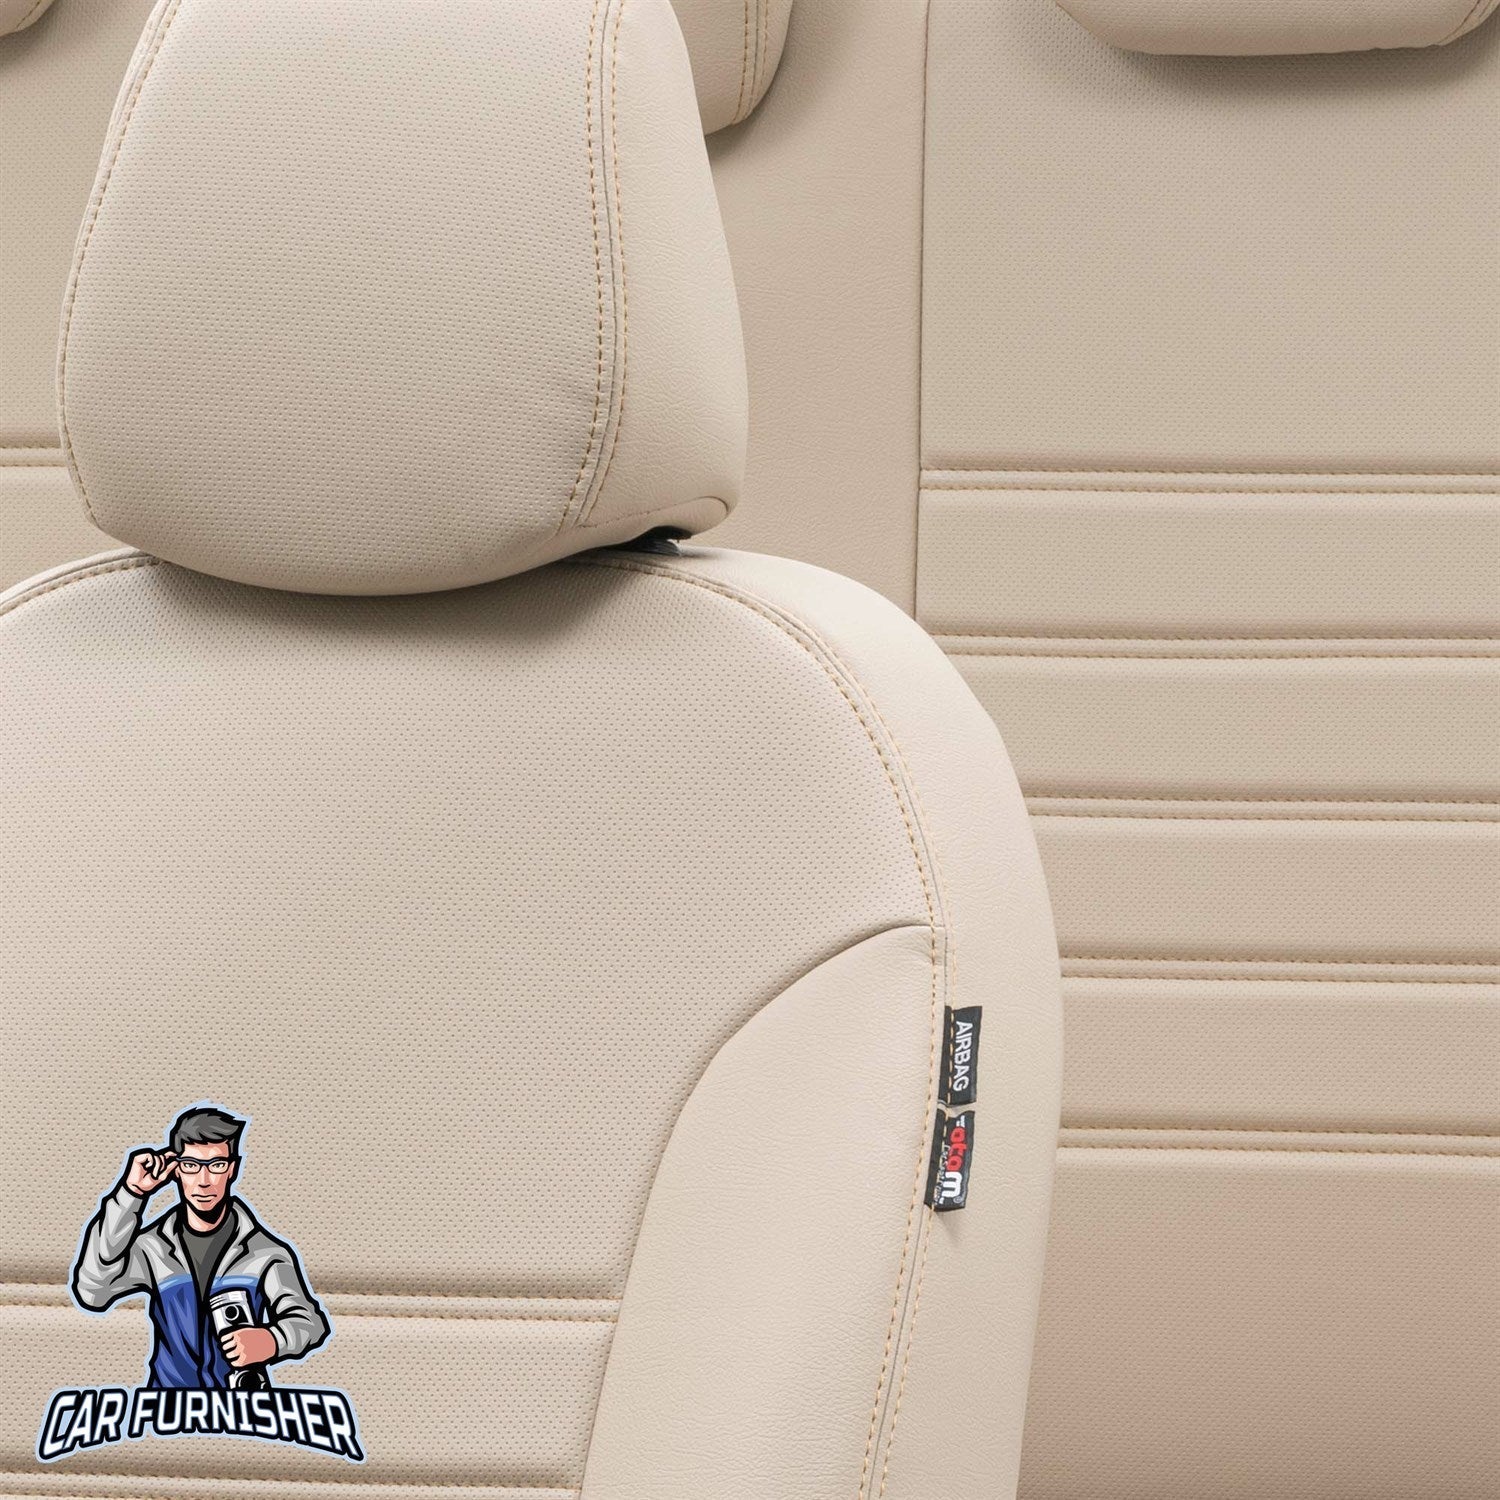 Suzuki Baleno Seat Covers Istanbul Leather Design Beige Leather